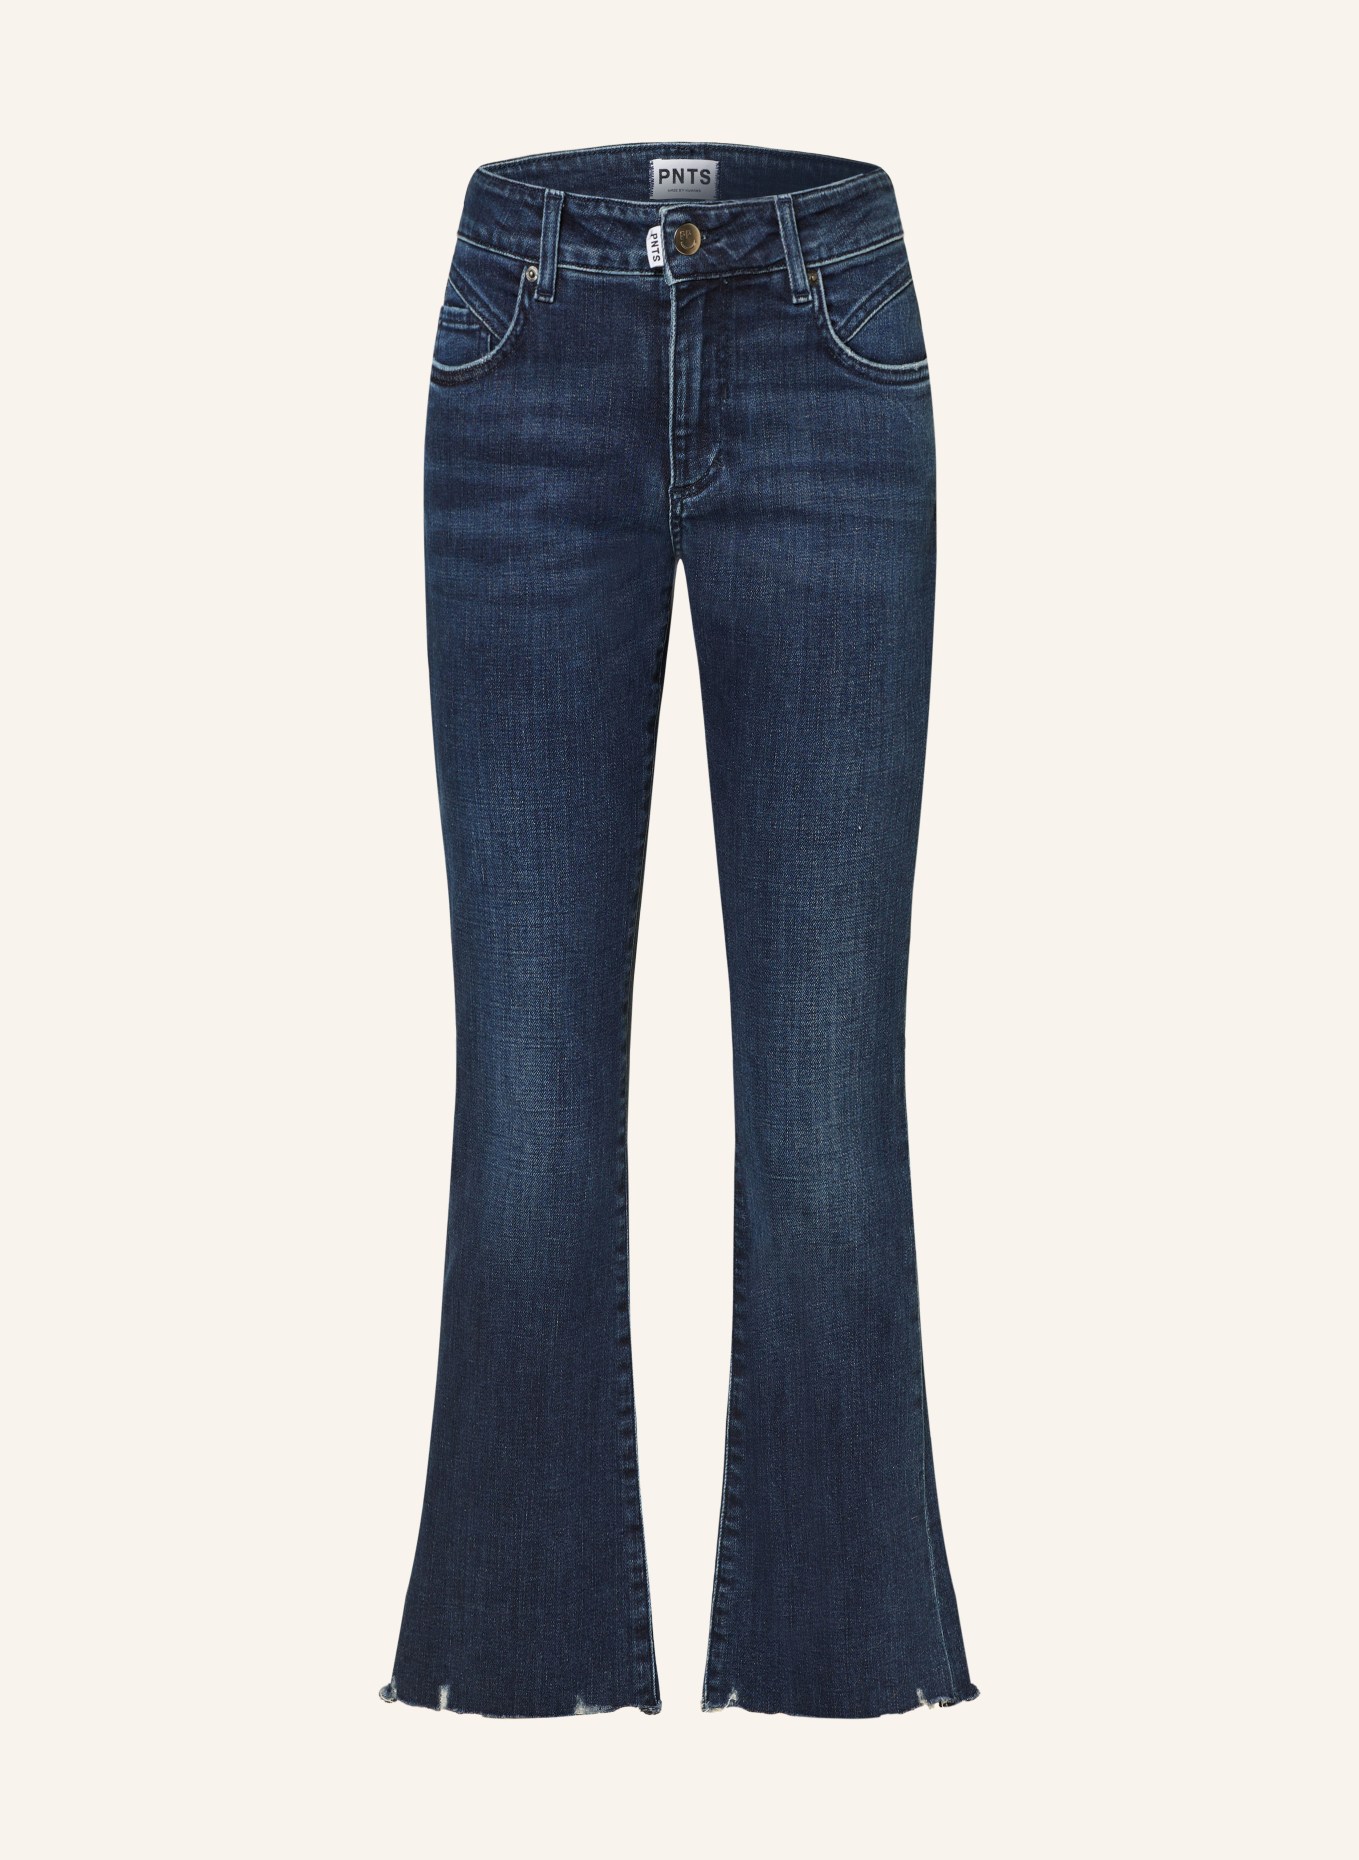 PNTS 7/8-Jeans THE MINI B, Farbe: 25 used indigo (Bild 1)